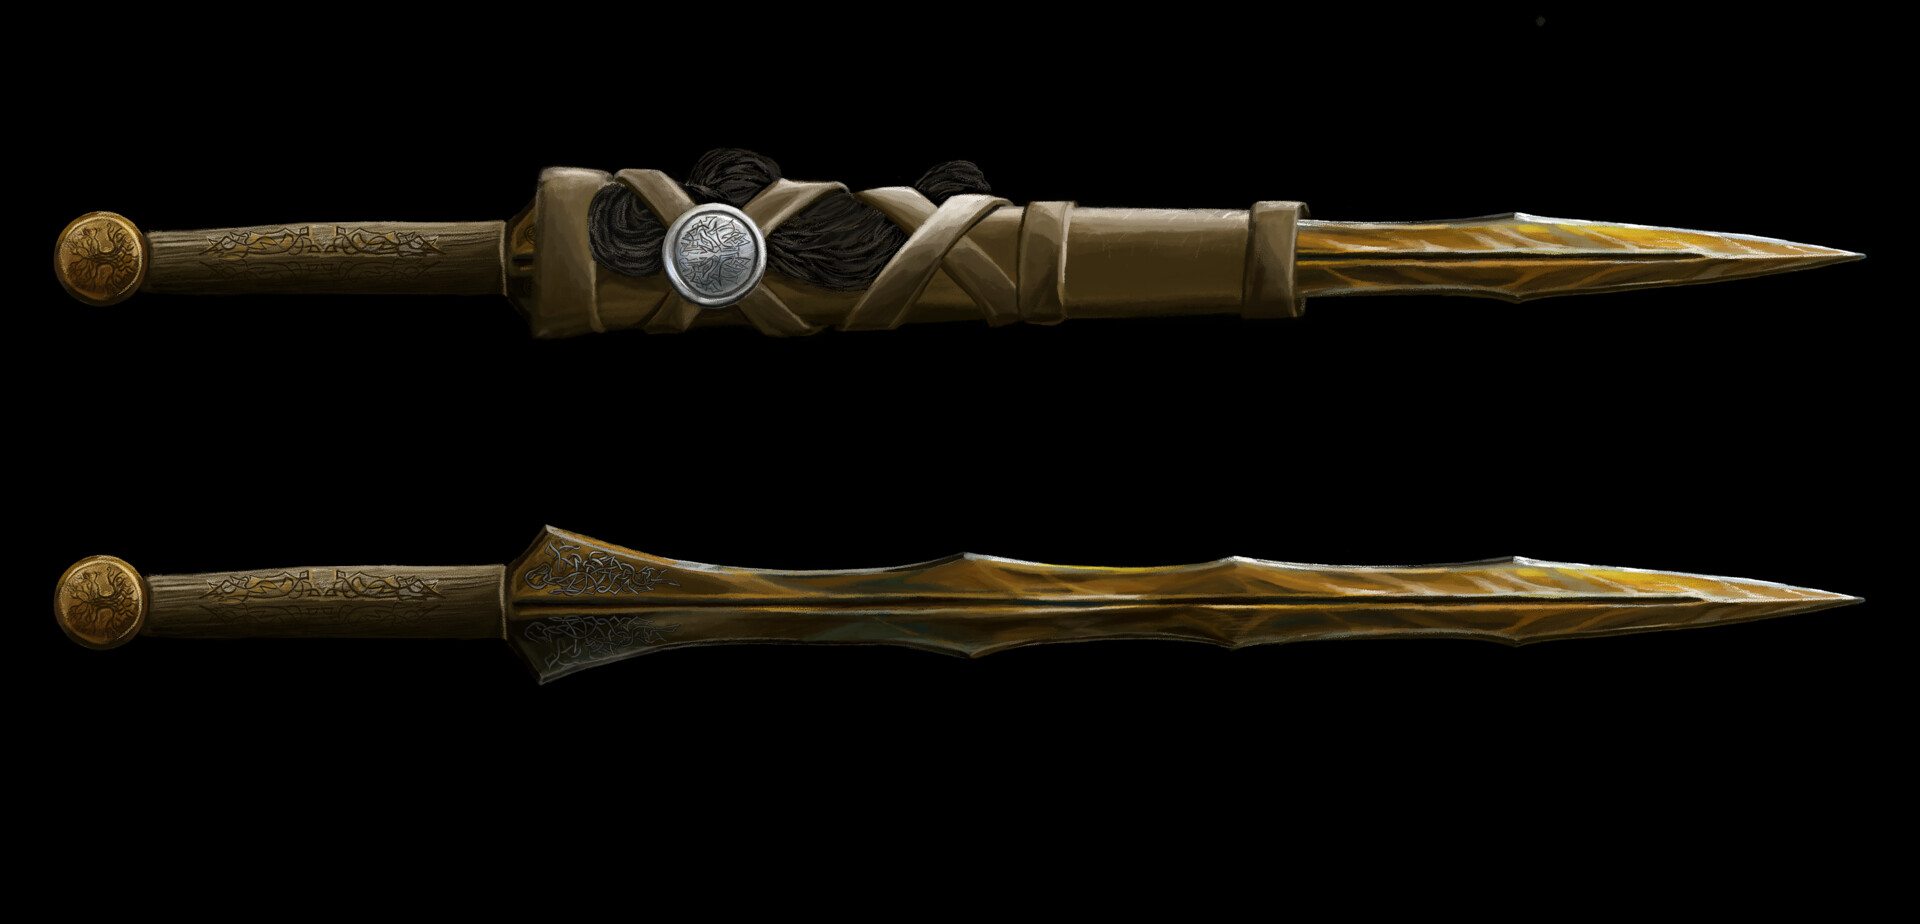 - Bronze Weapons Concept